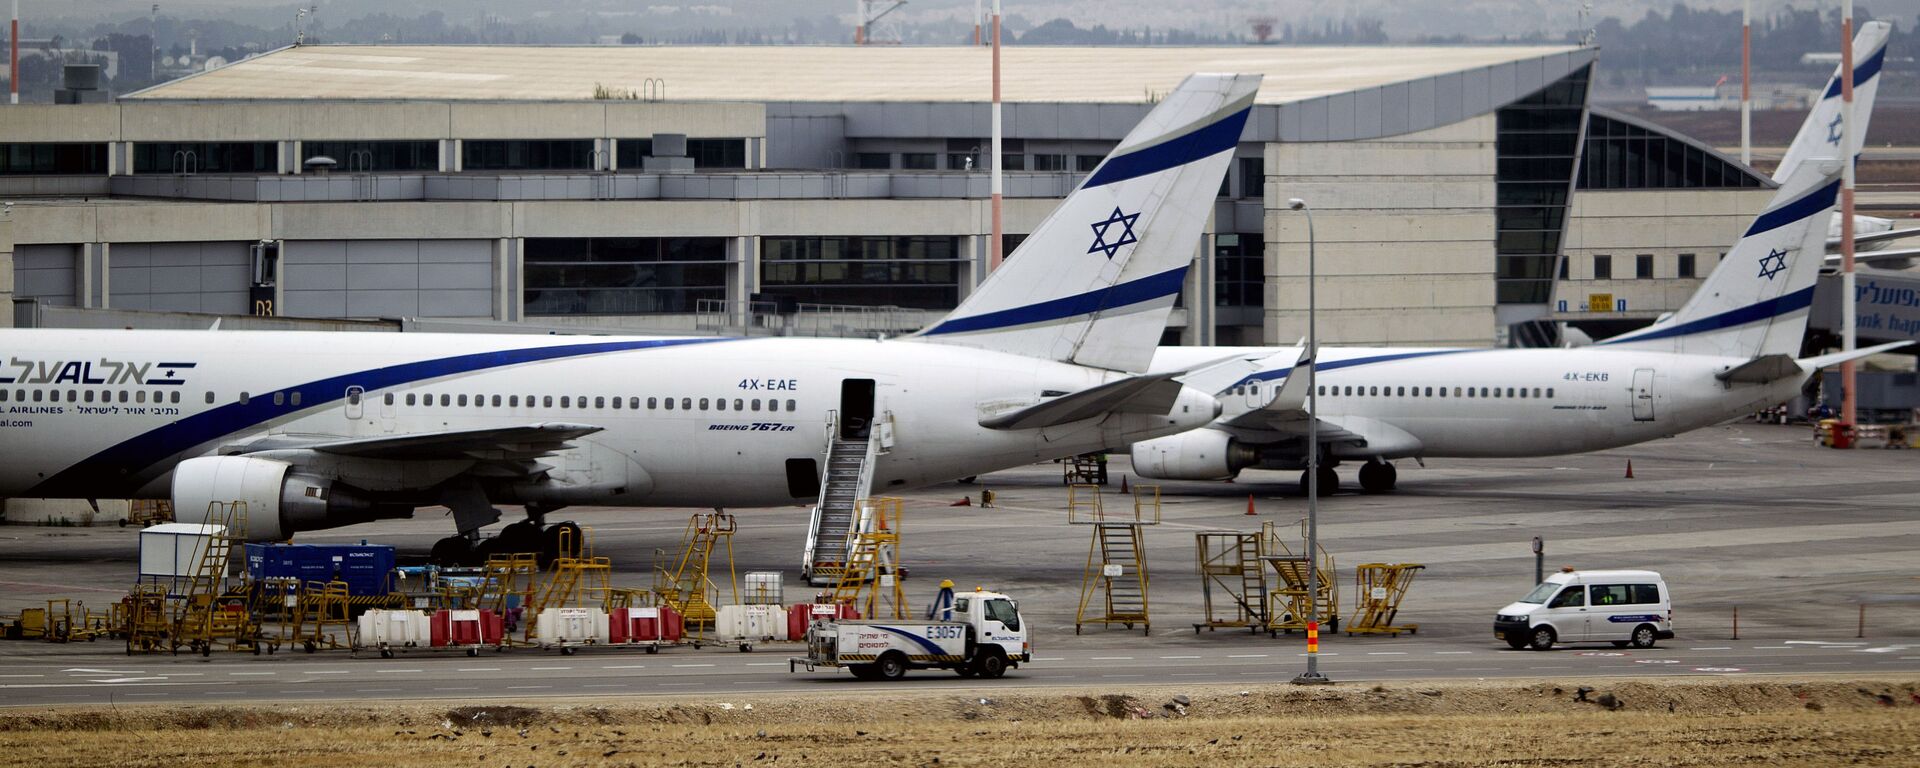 مطار بن غوريون الدولي في تل أبيب، إسرائيل 21 أبريل/ نيسان 2013 - سبوتنيك عربي, 1920, 23.08.2022